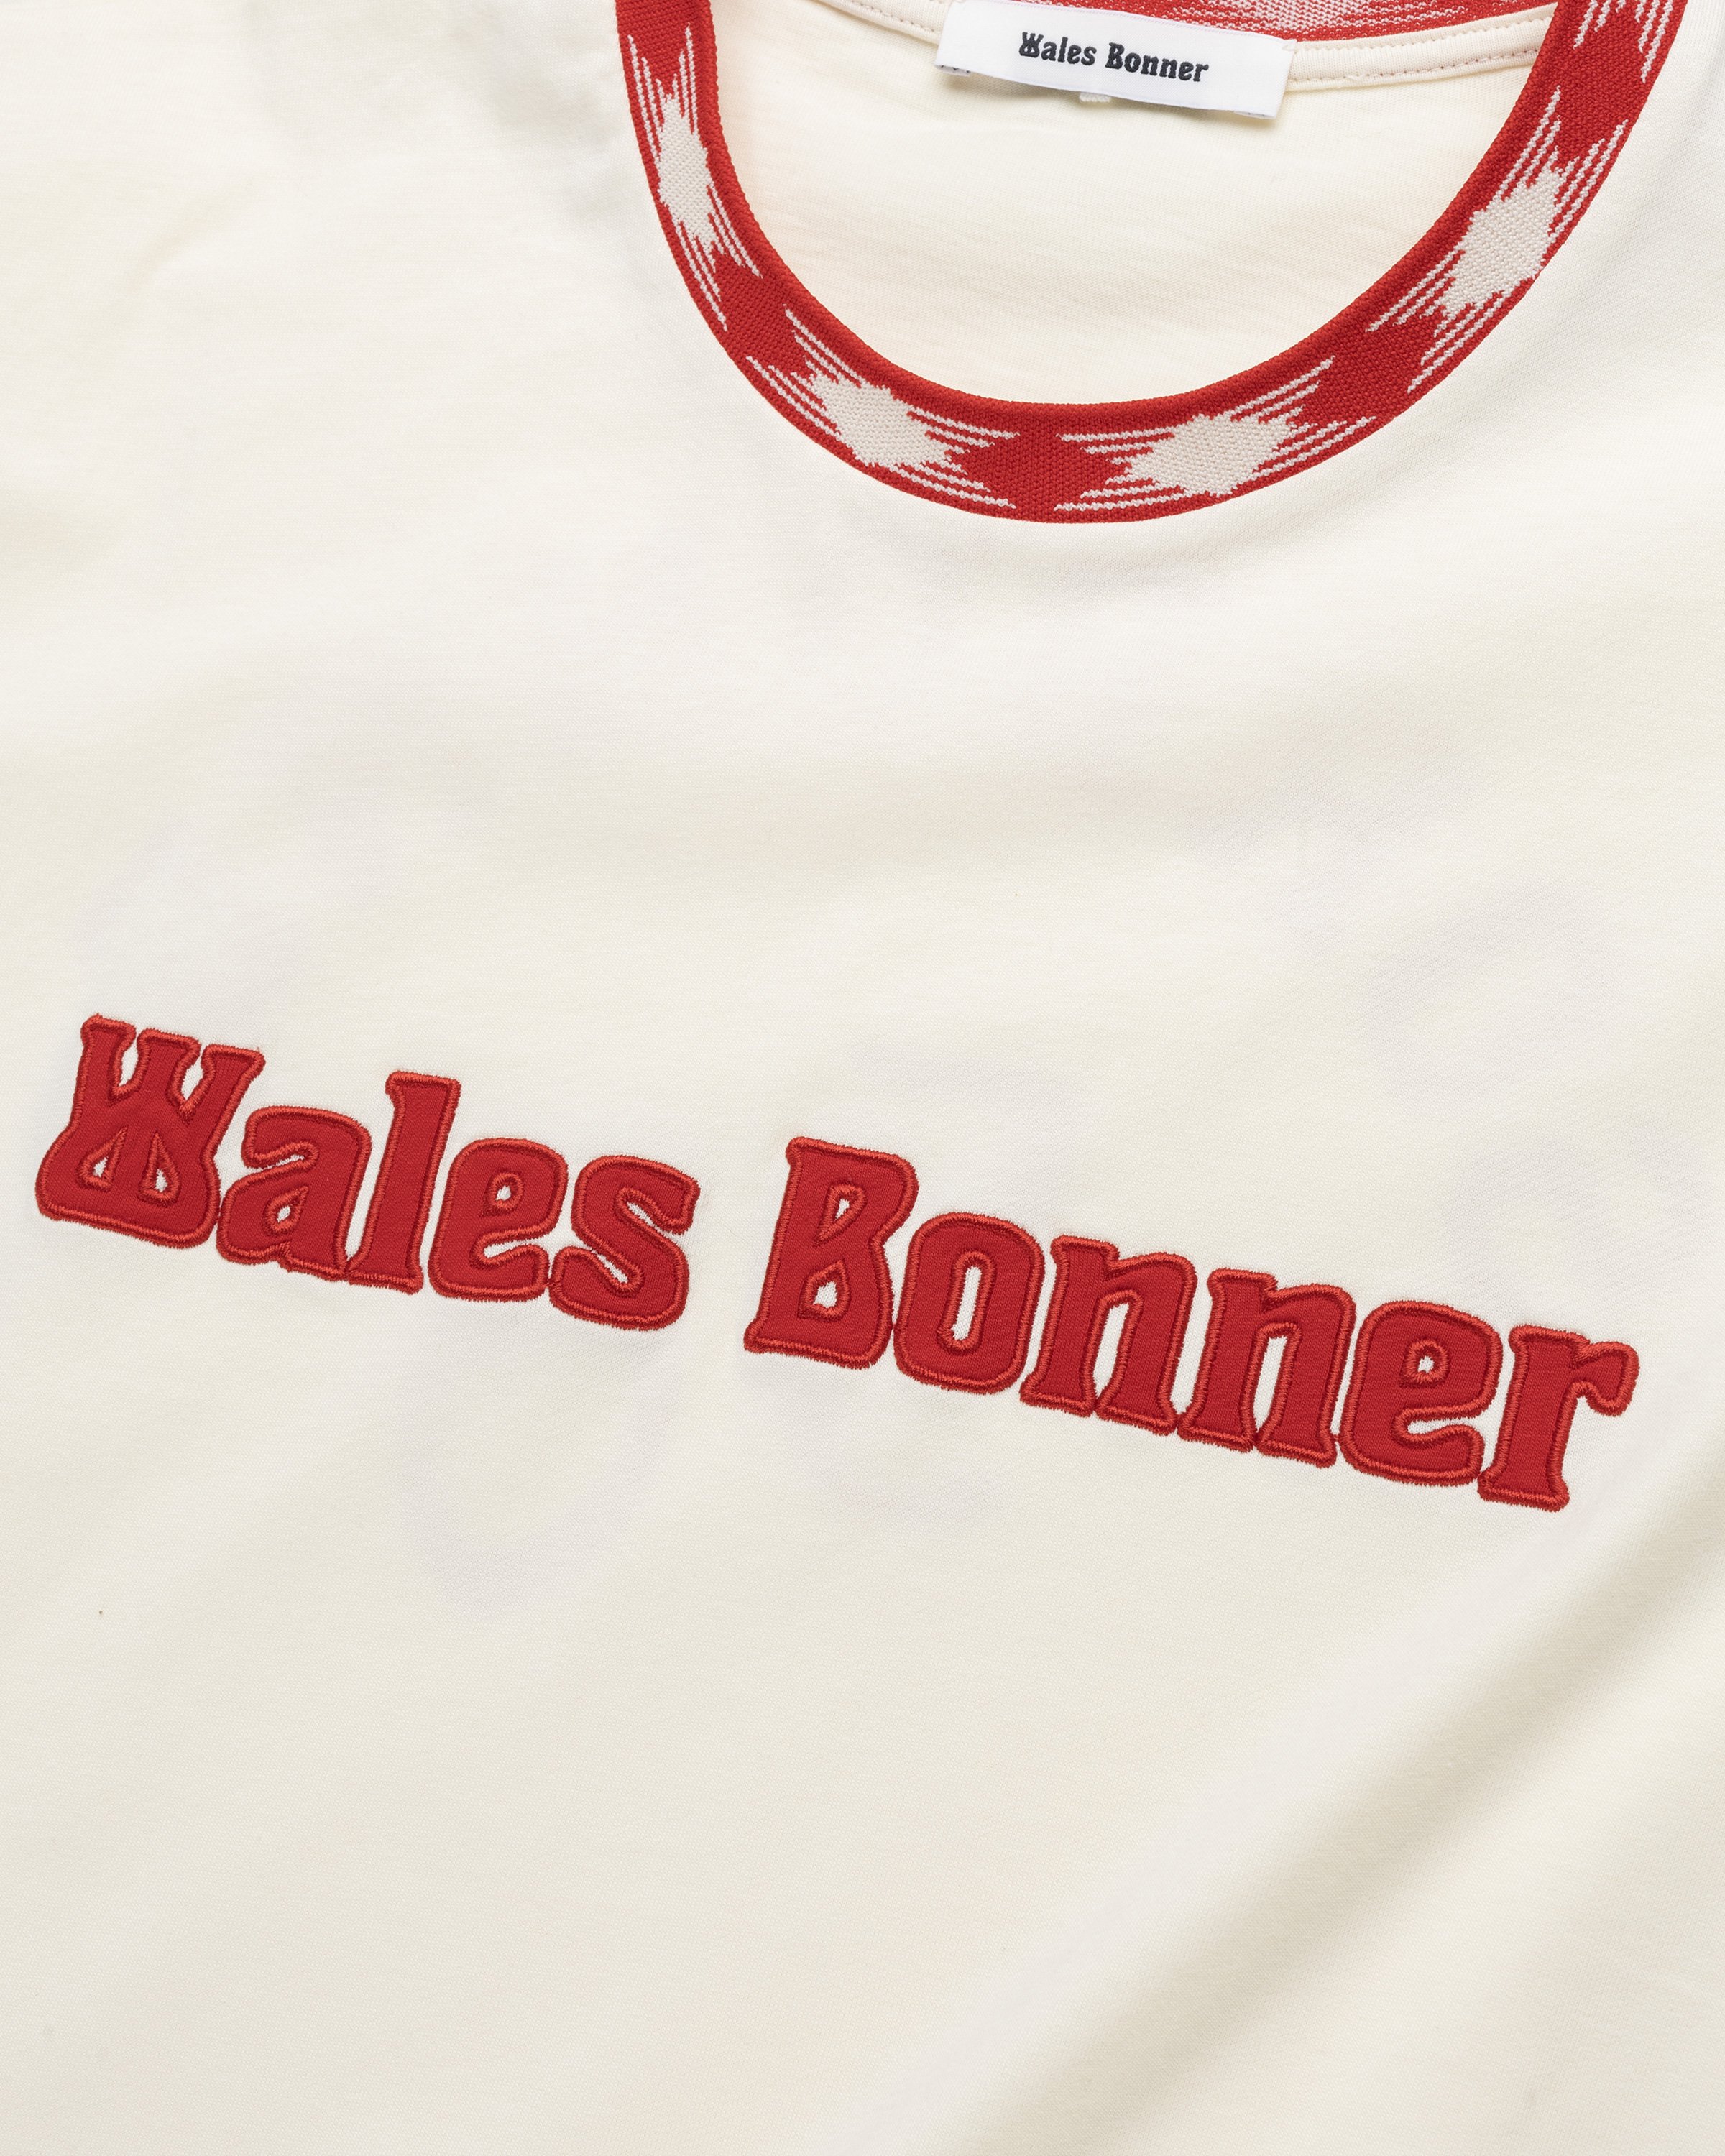 Wales Bonner - Original Tee Ivory - Clothing - White - Image 5